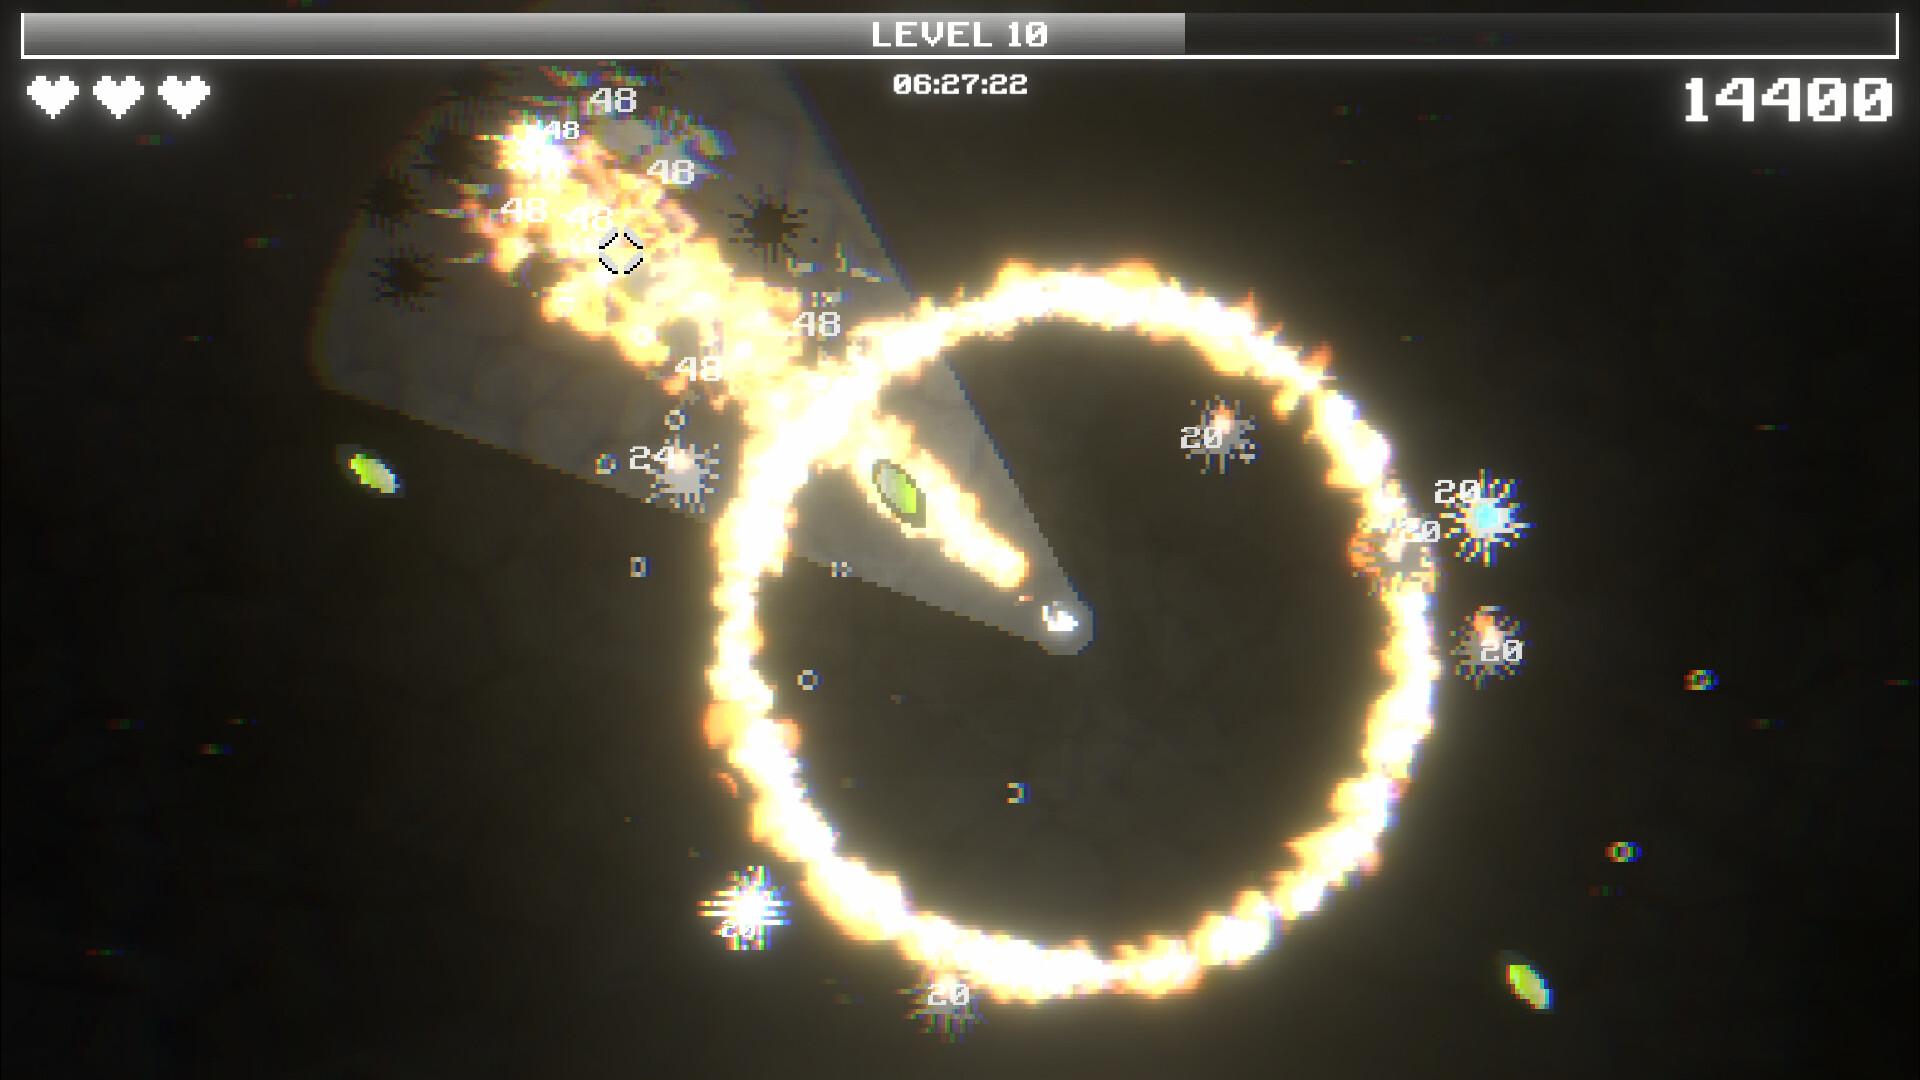 Screenshot №2 from game Disfigure